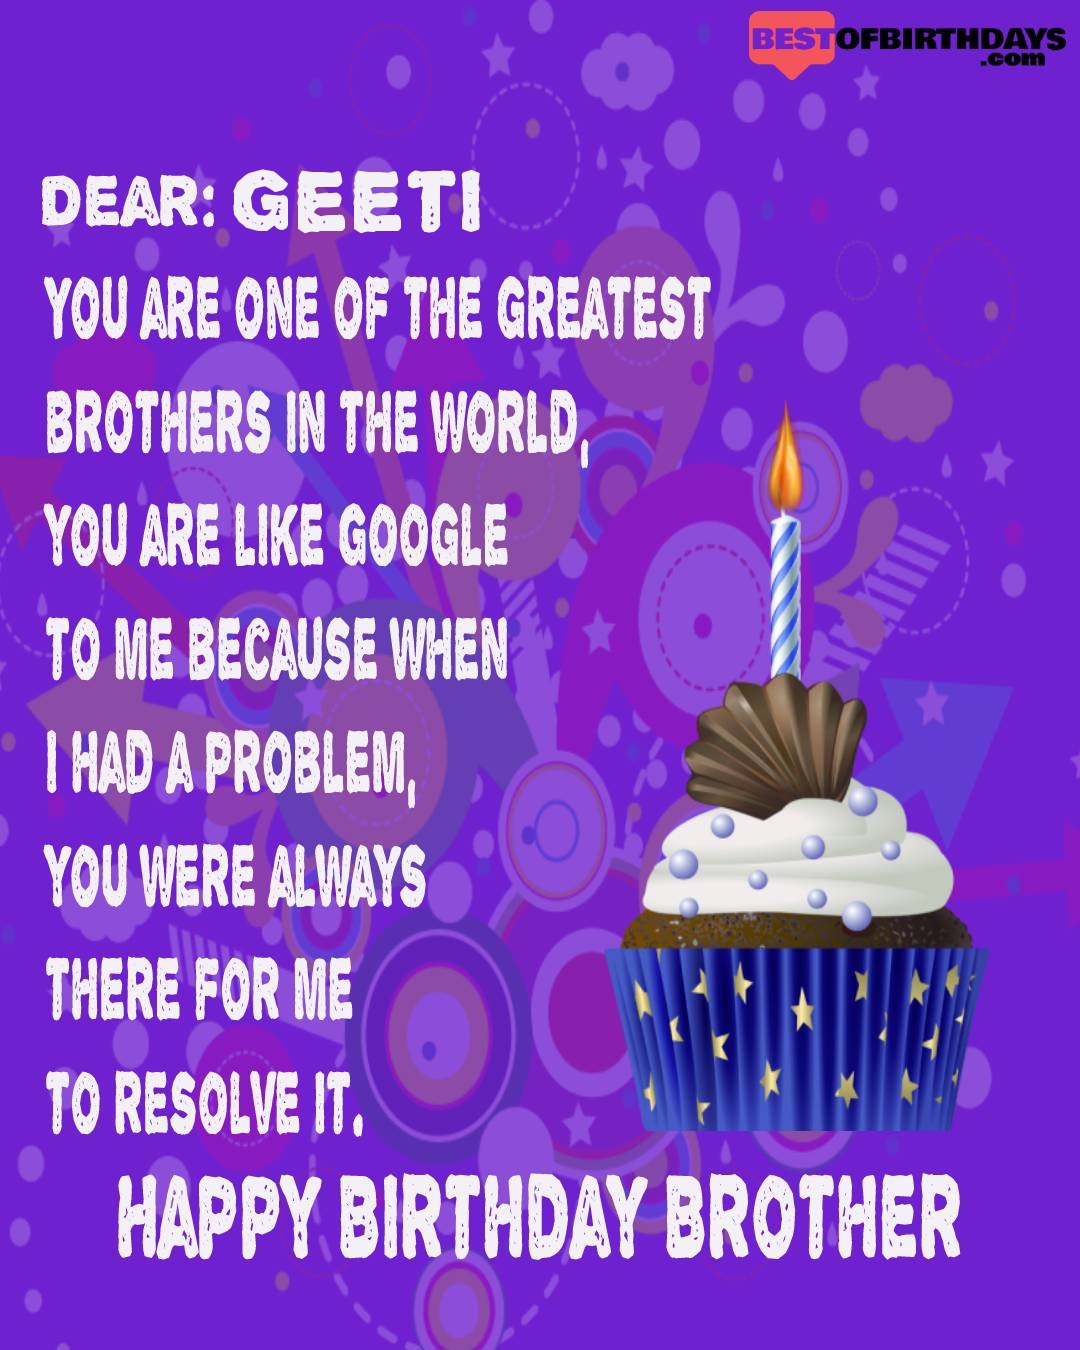 Happy birthday geeti bhai brother bro